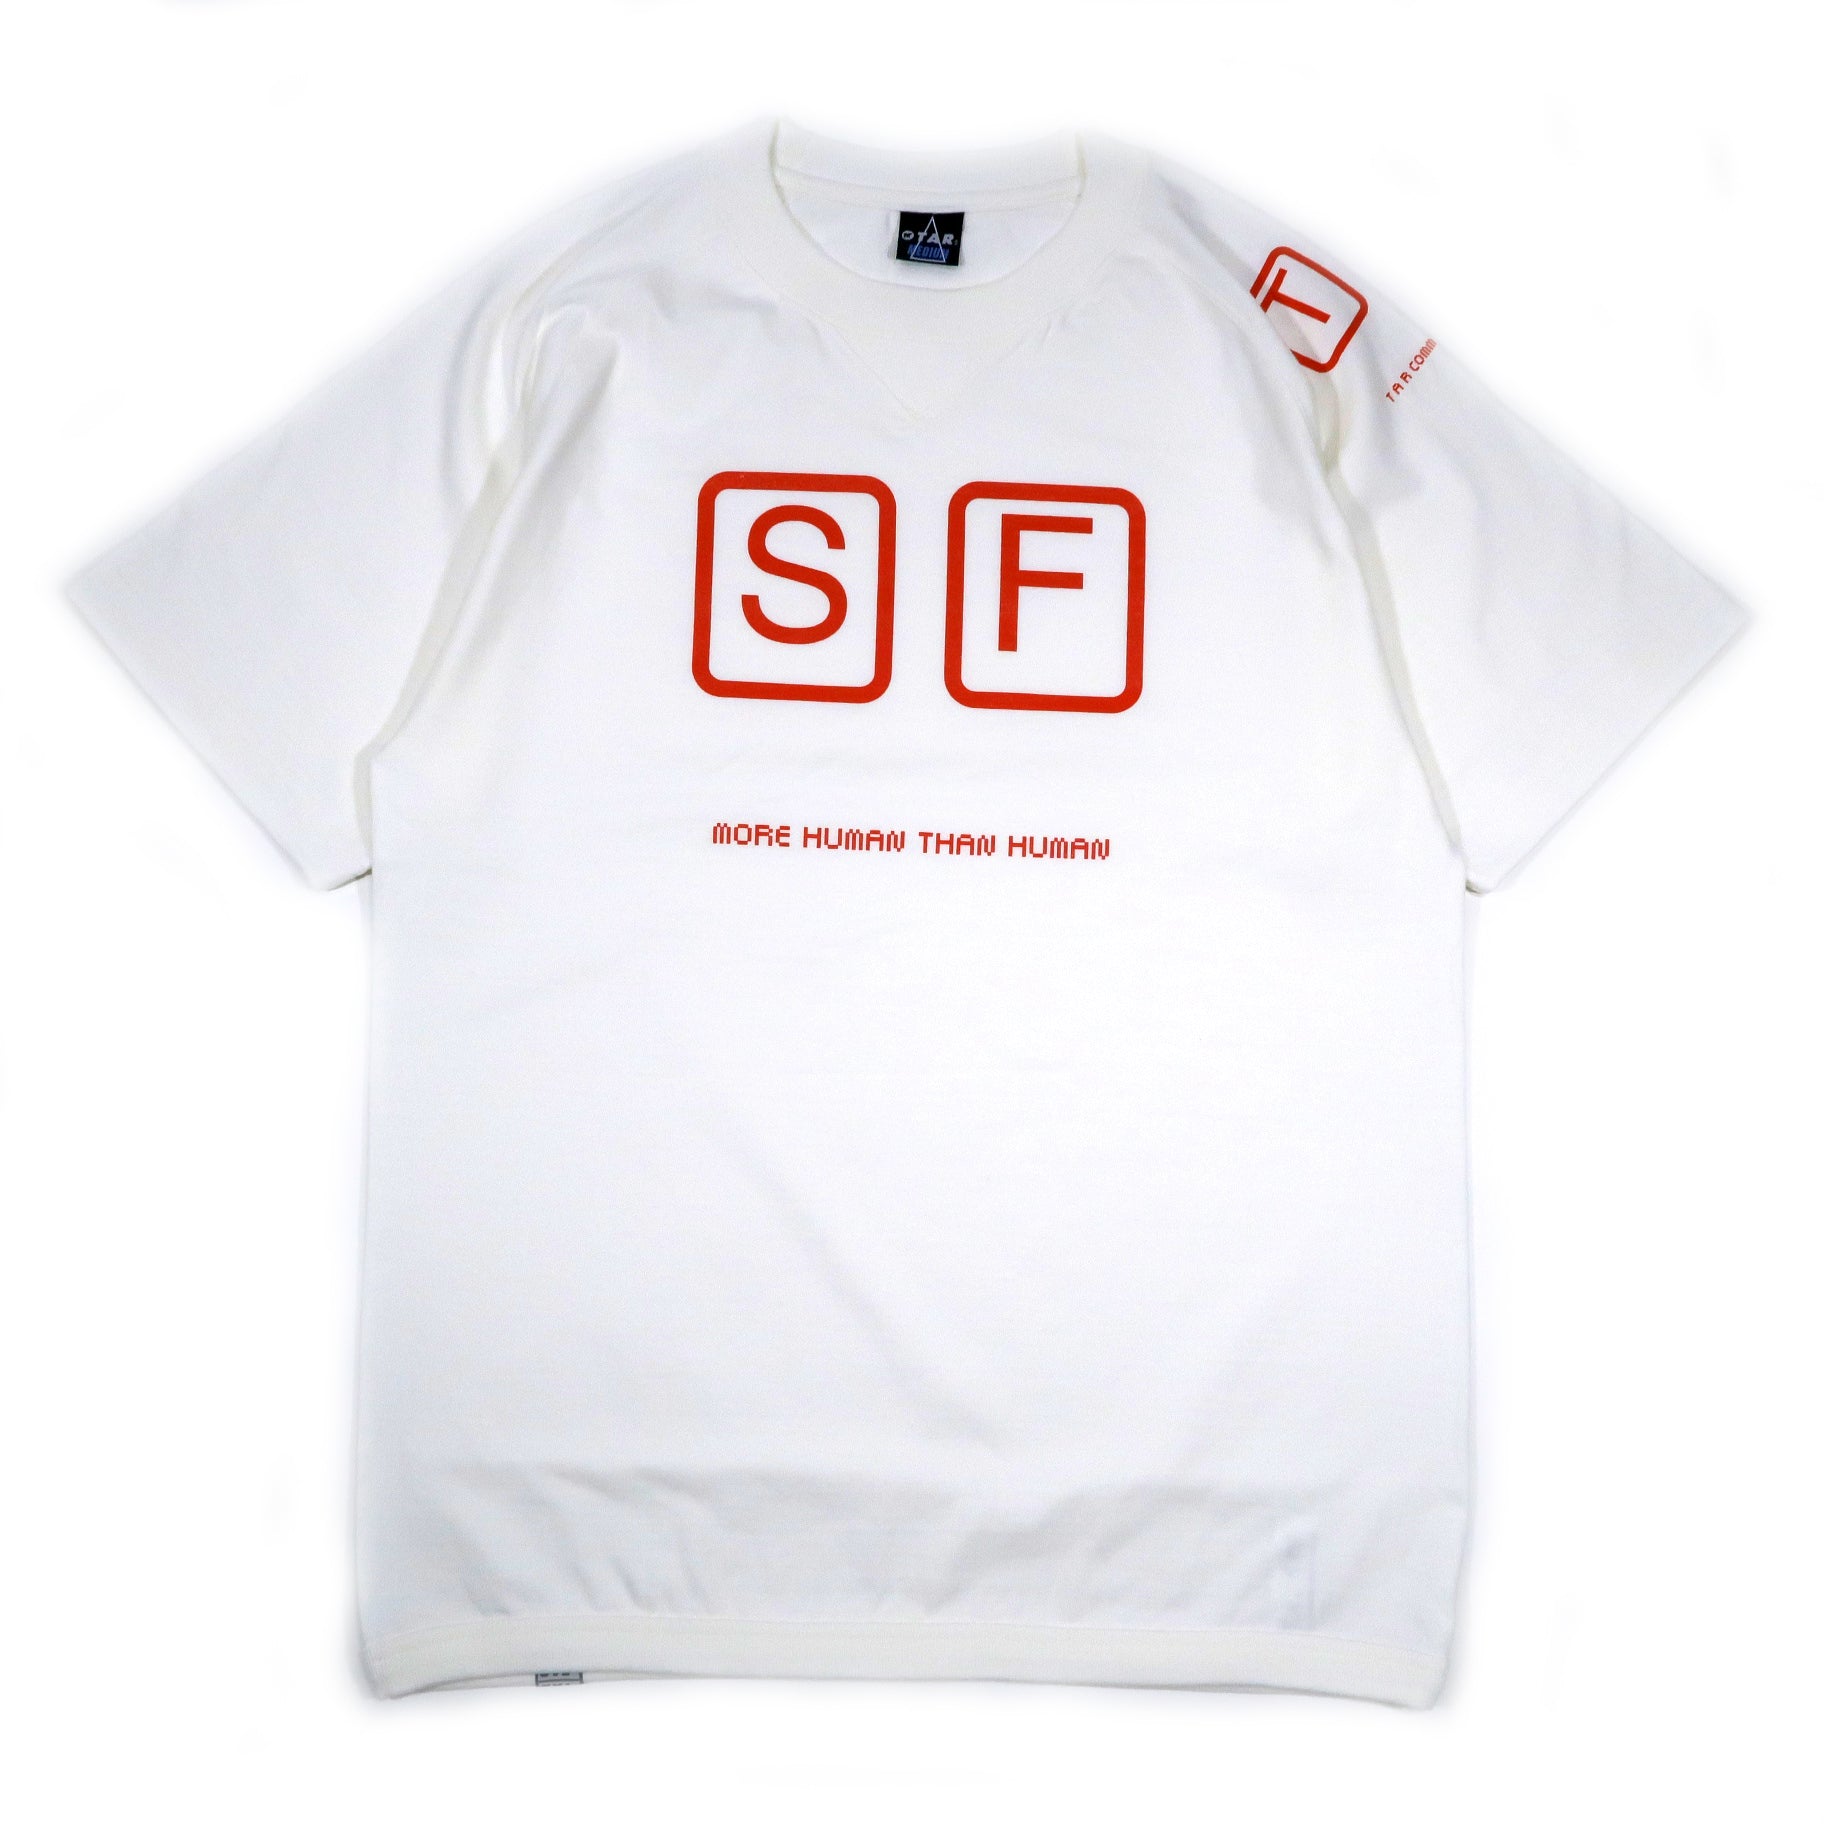 SF S/s T-shirts